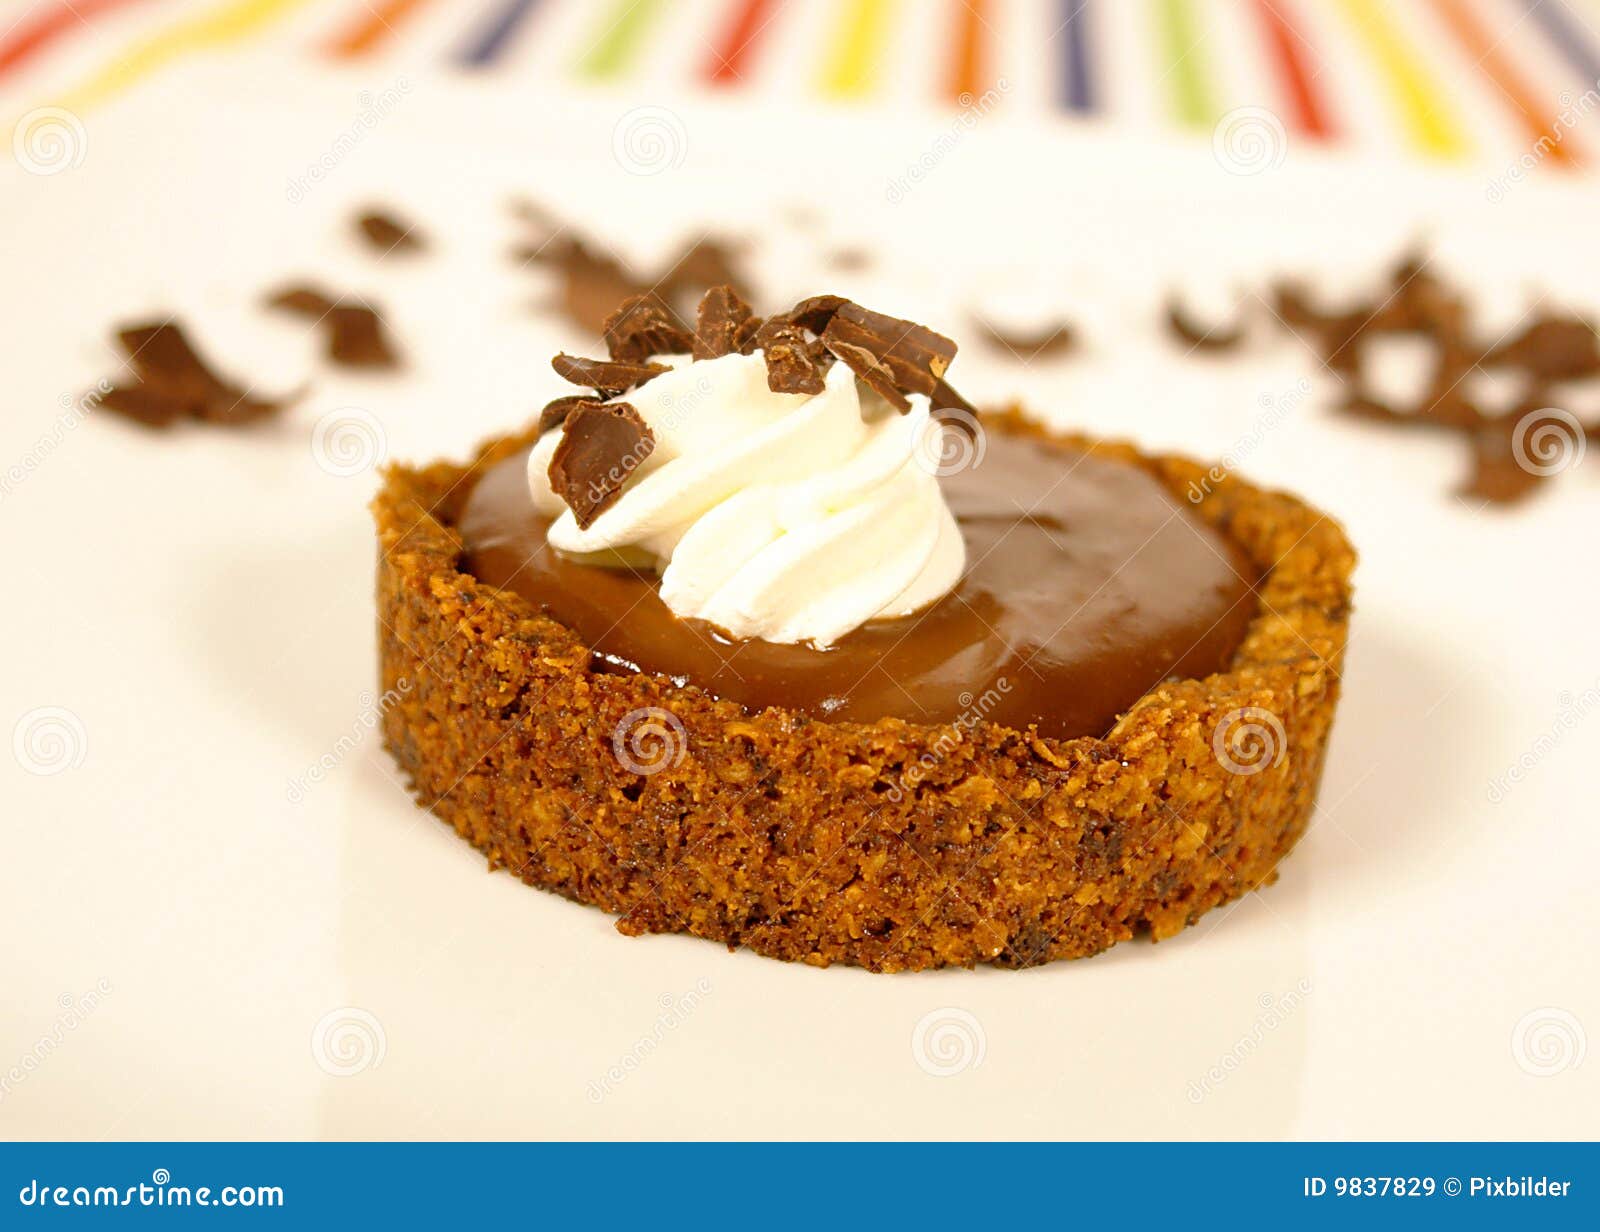 Chocolate pie stock image. Image of chantilly, food ...